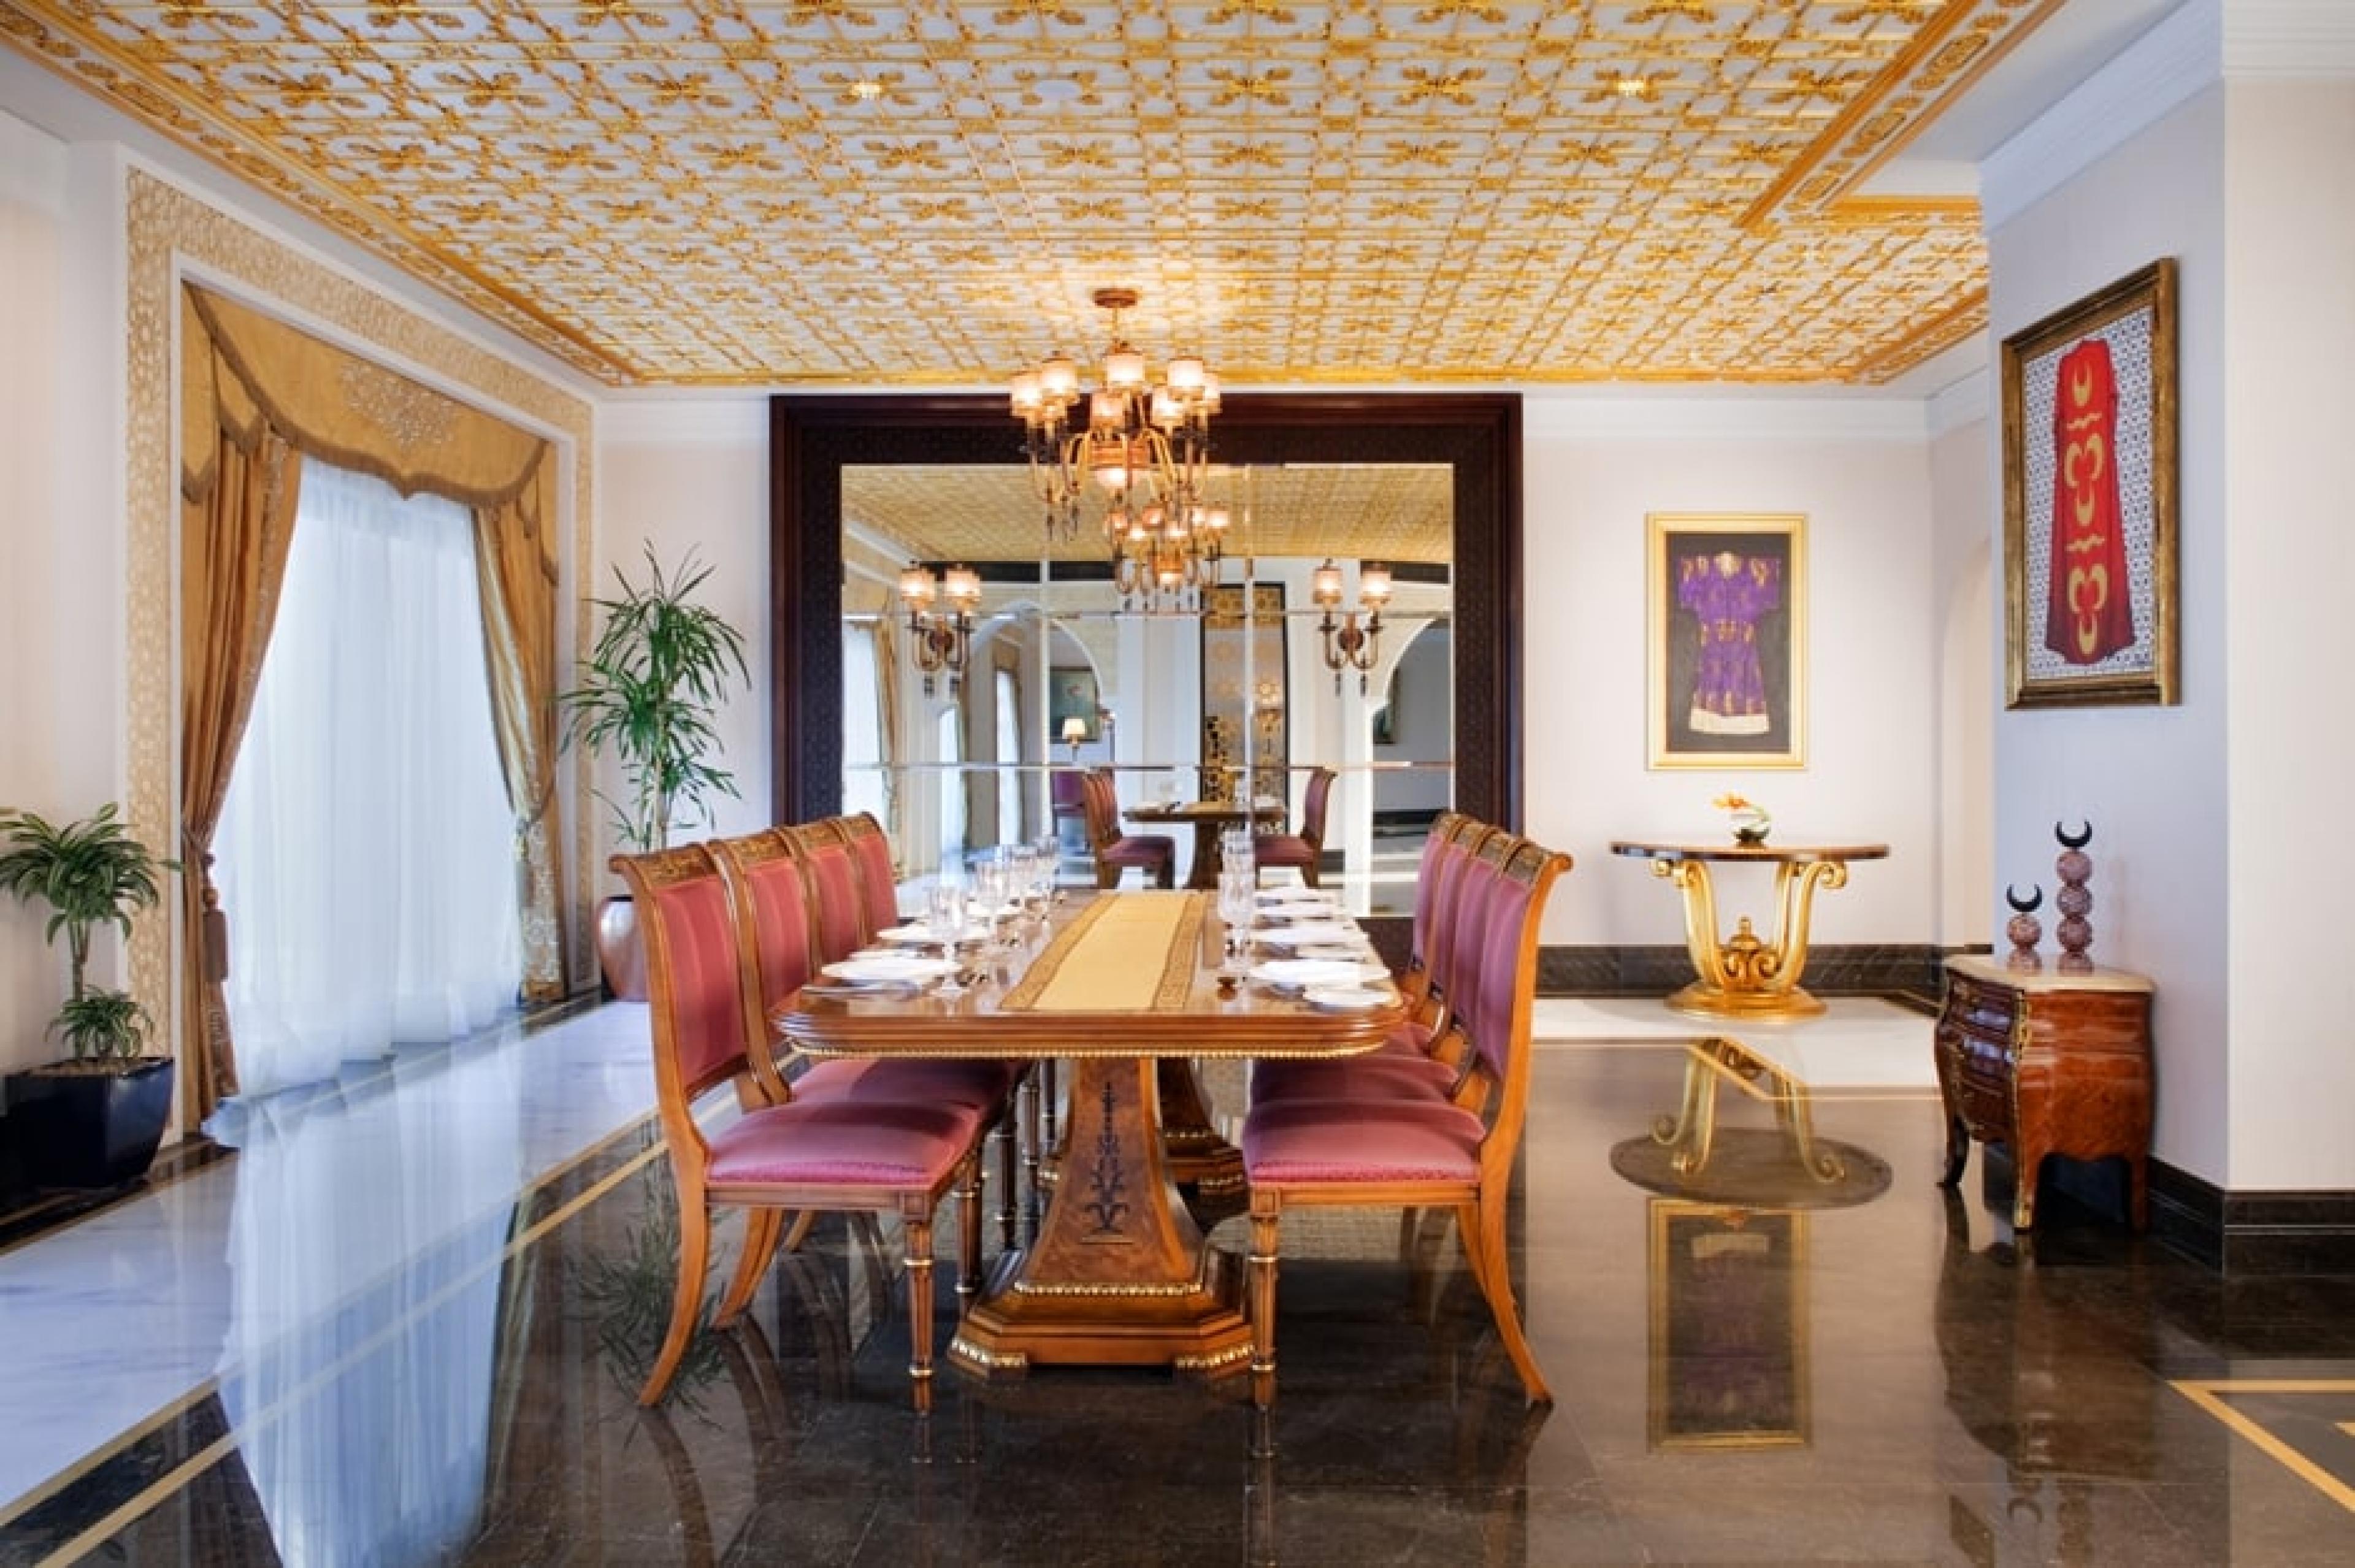 Grand Imperial Suite - Dining Room at Jumeirah Zabeel Saray, Dubai, United Arab Emirates